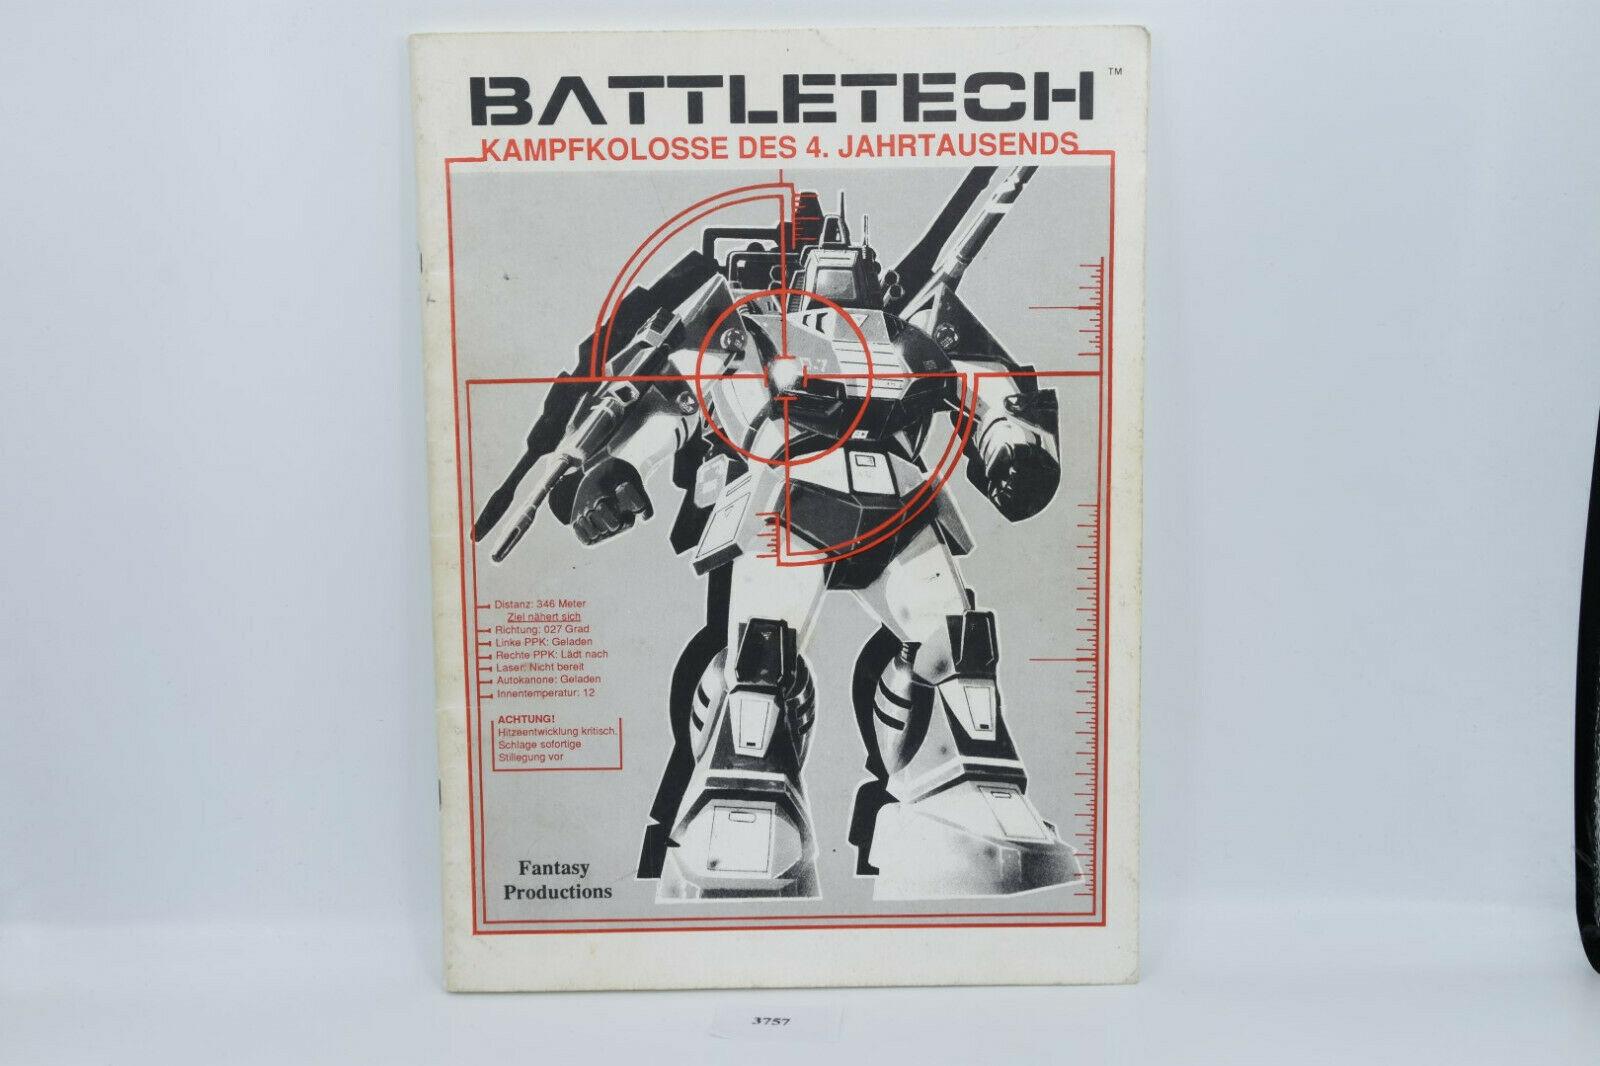 Battletech - Kampfkolosse des 4. Jahrtausends